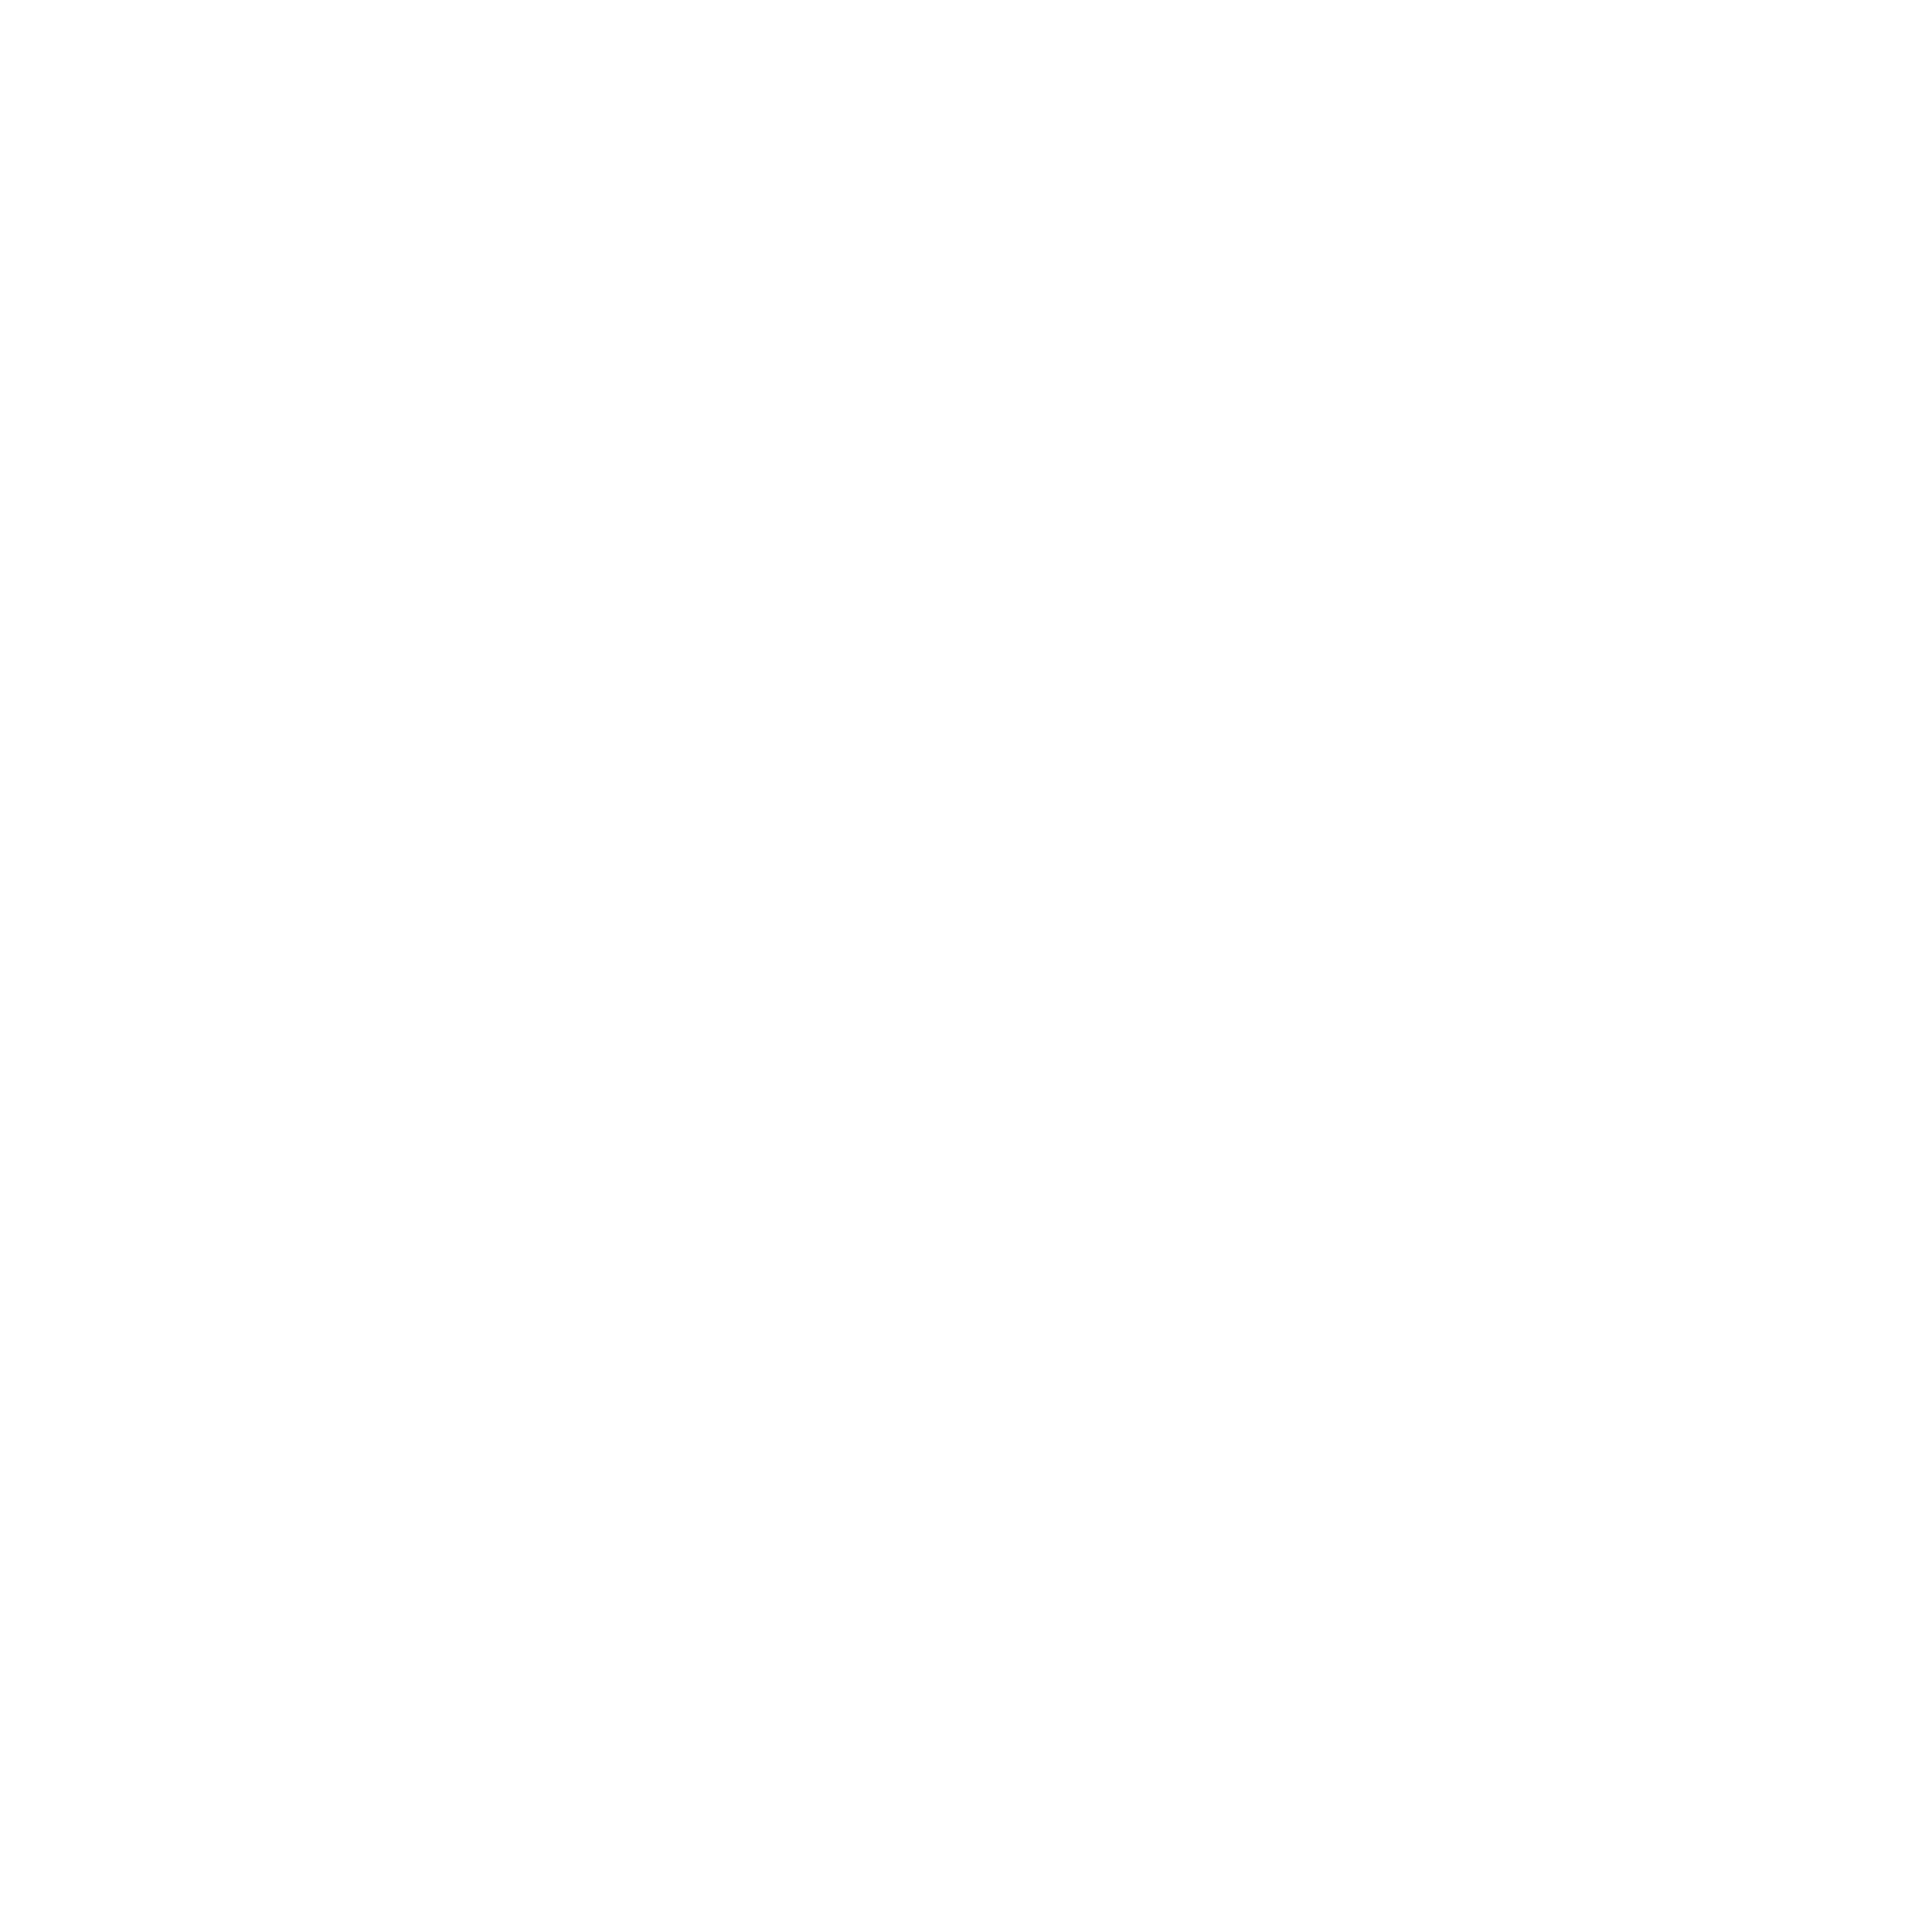 Olympic legend tips Sha'Carri Richardson for Paris 2024 stardom after US  sprinter showed new level - The Mirror US